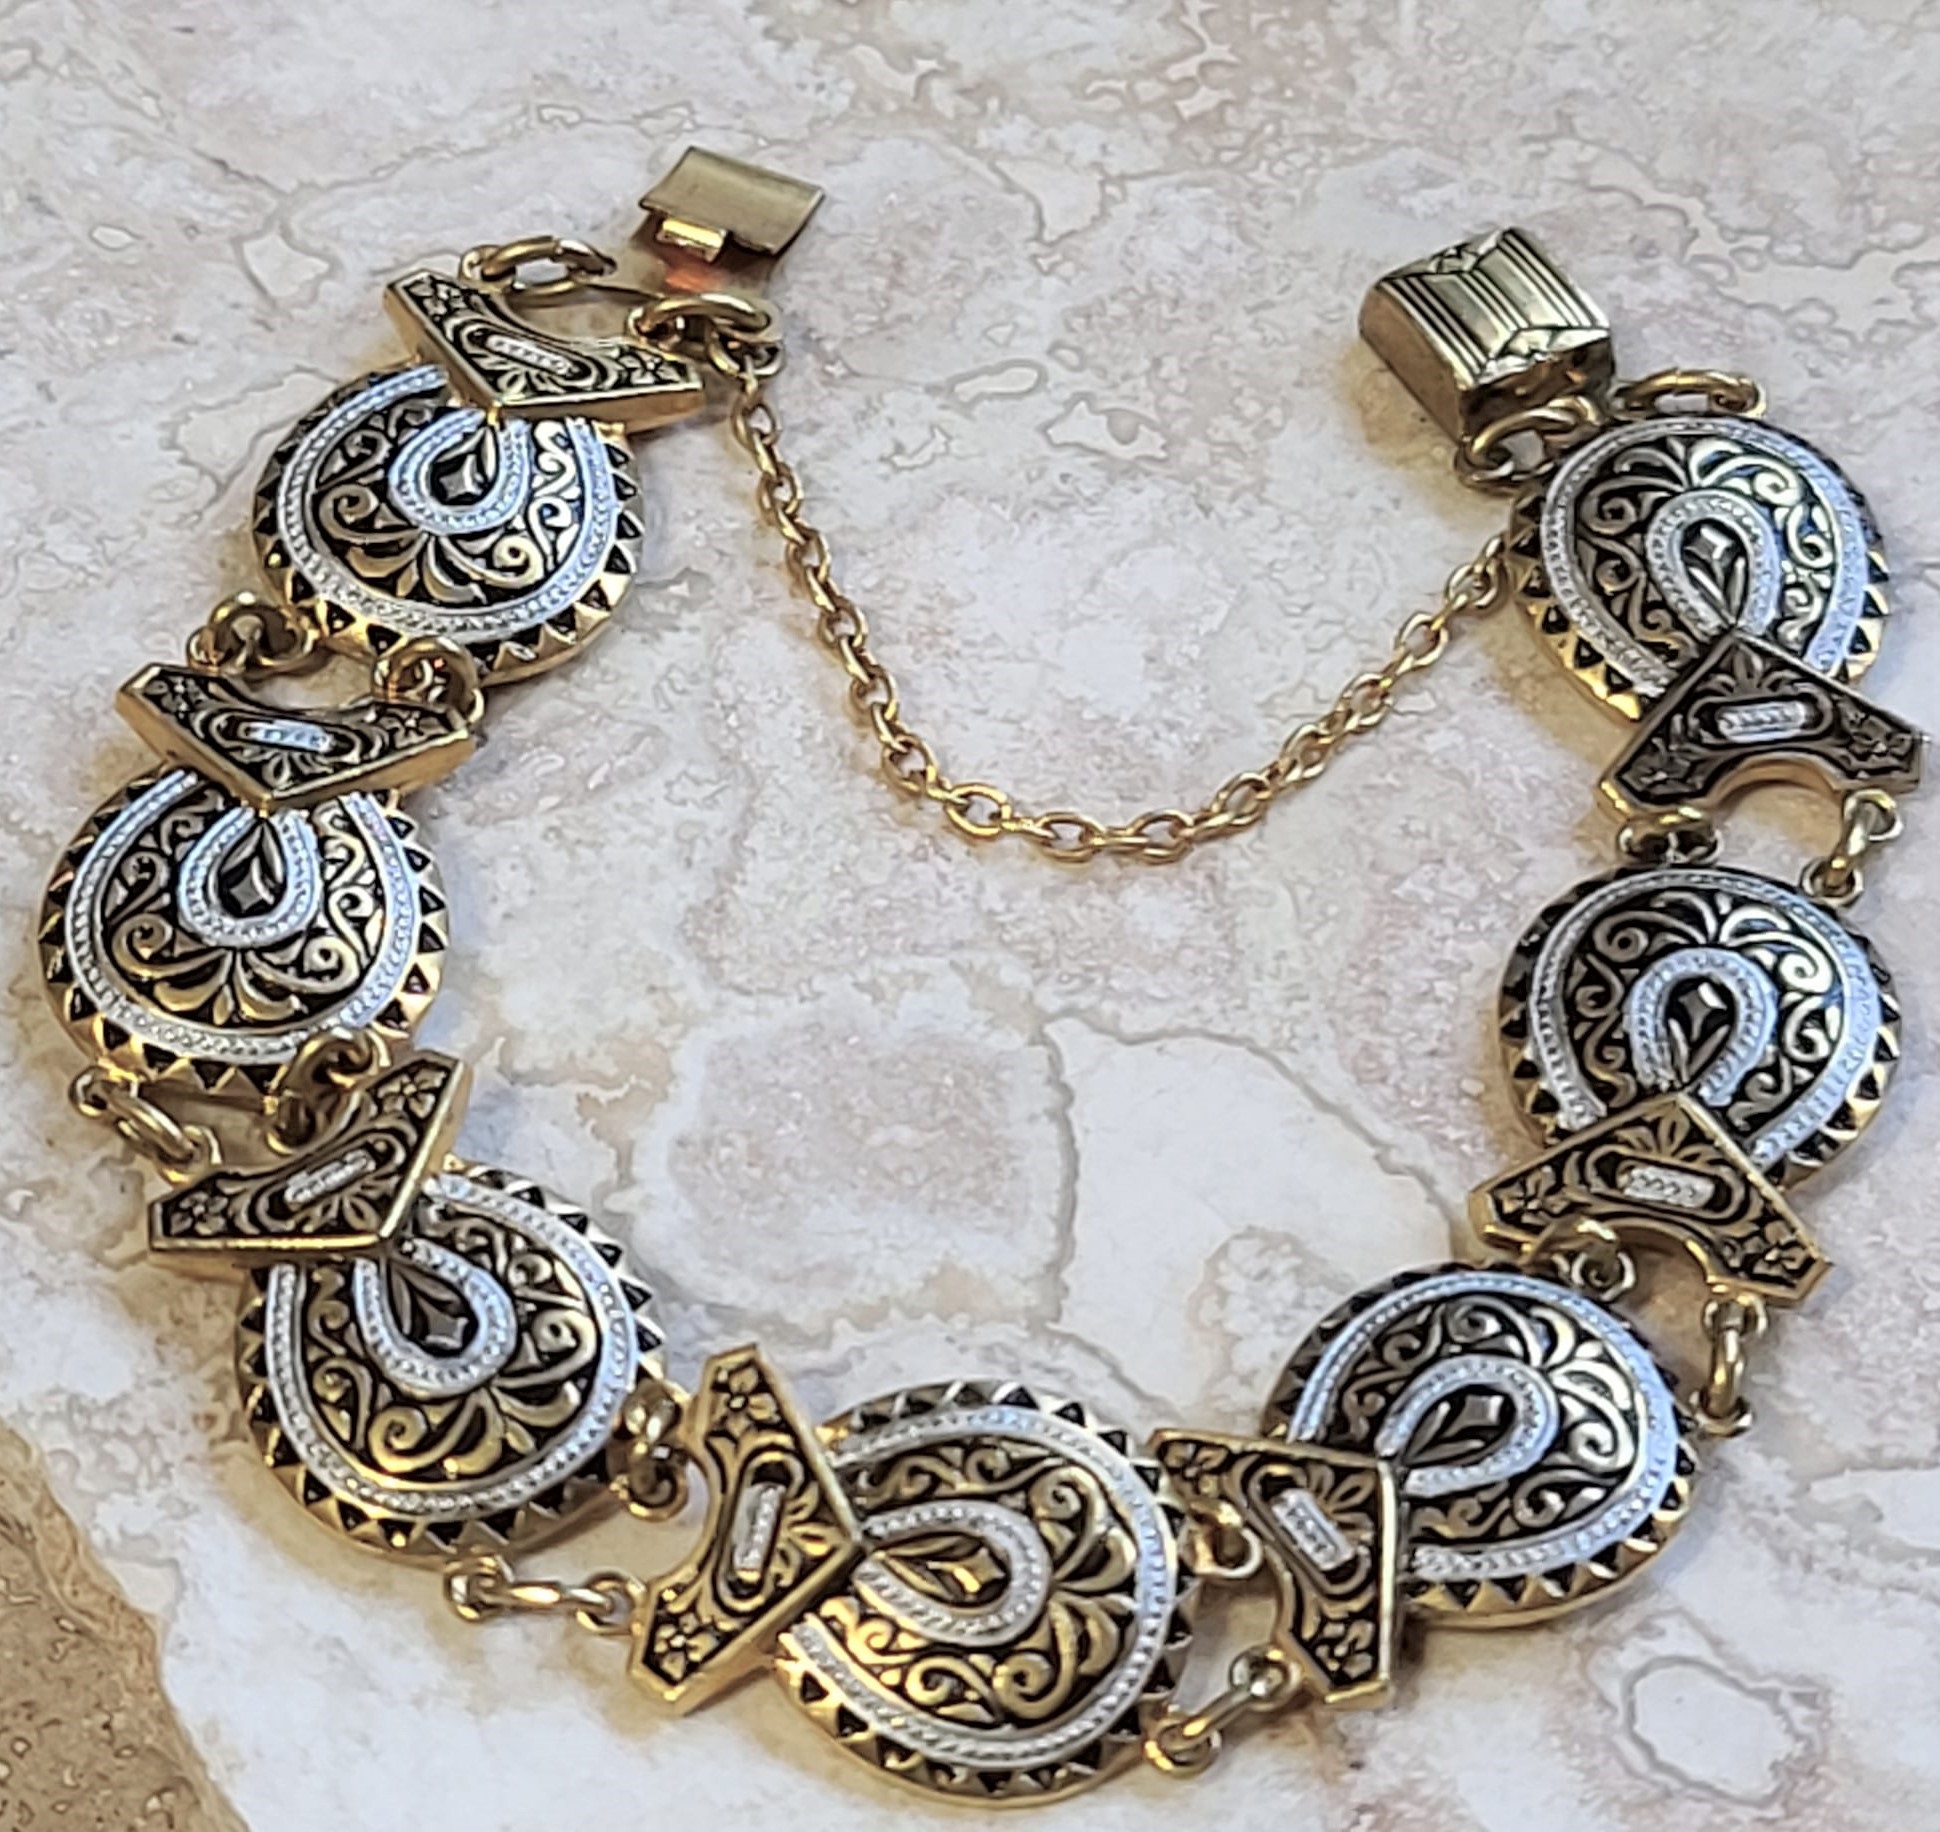 Damescene Spanish Bracelet with Safety Chain